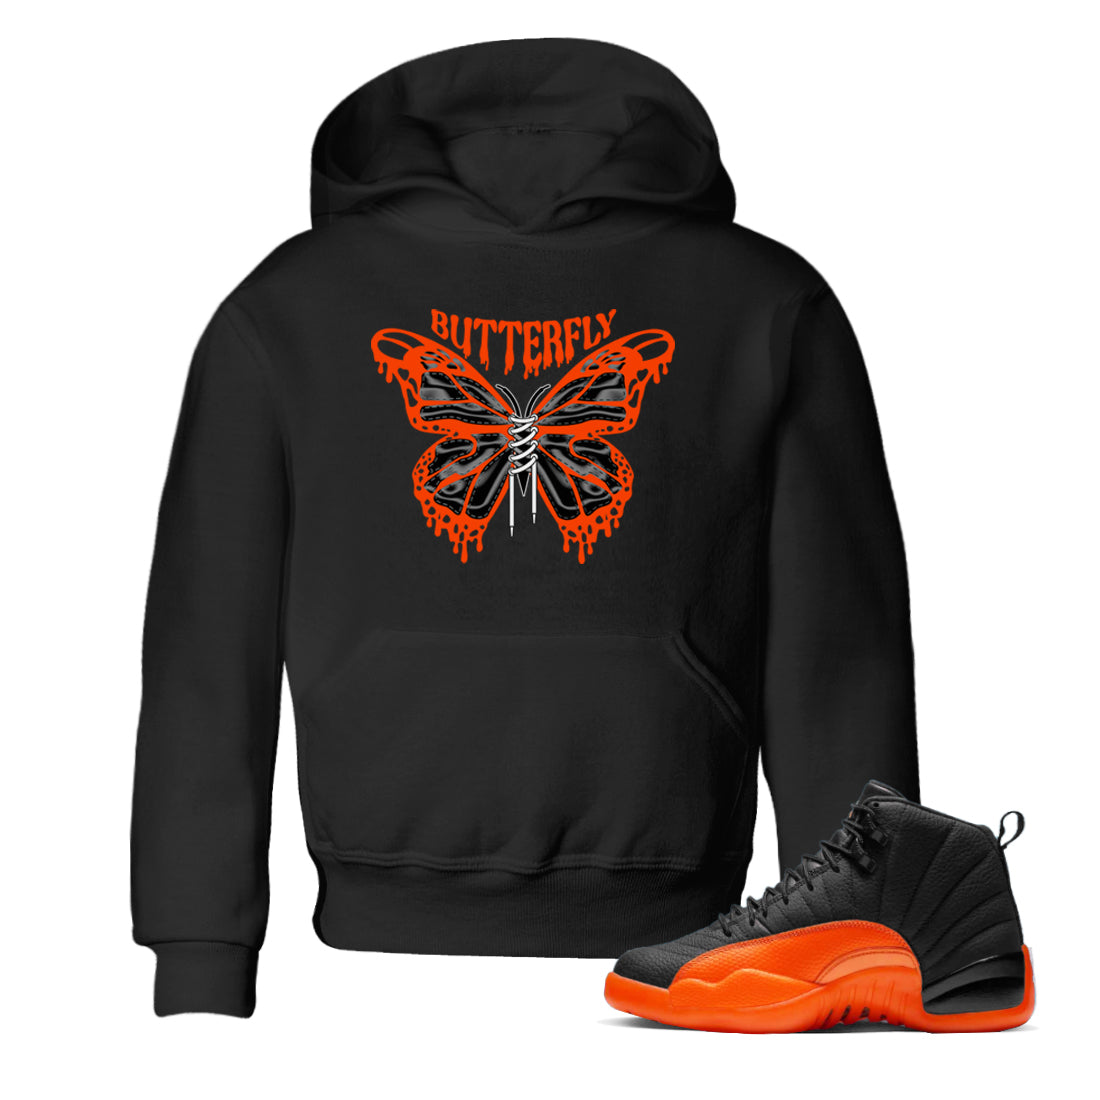 Air Jordan 12 Brilliant Orange Sneaker Match Tees Butterfly Sneaker Tees AJ12 Brilliant Orange Sneaker Release Tees Kids Shirts Black 1